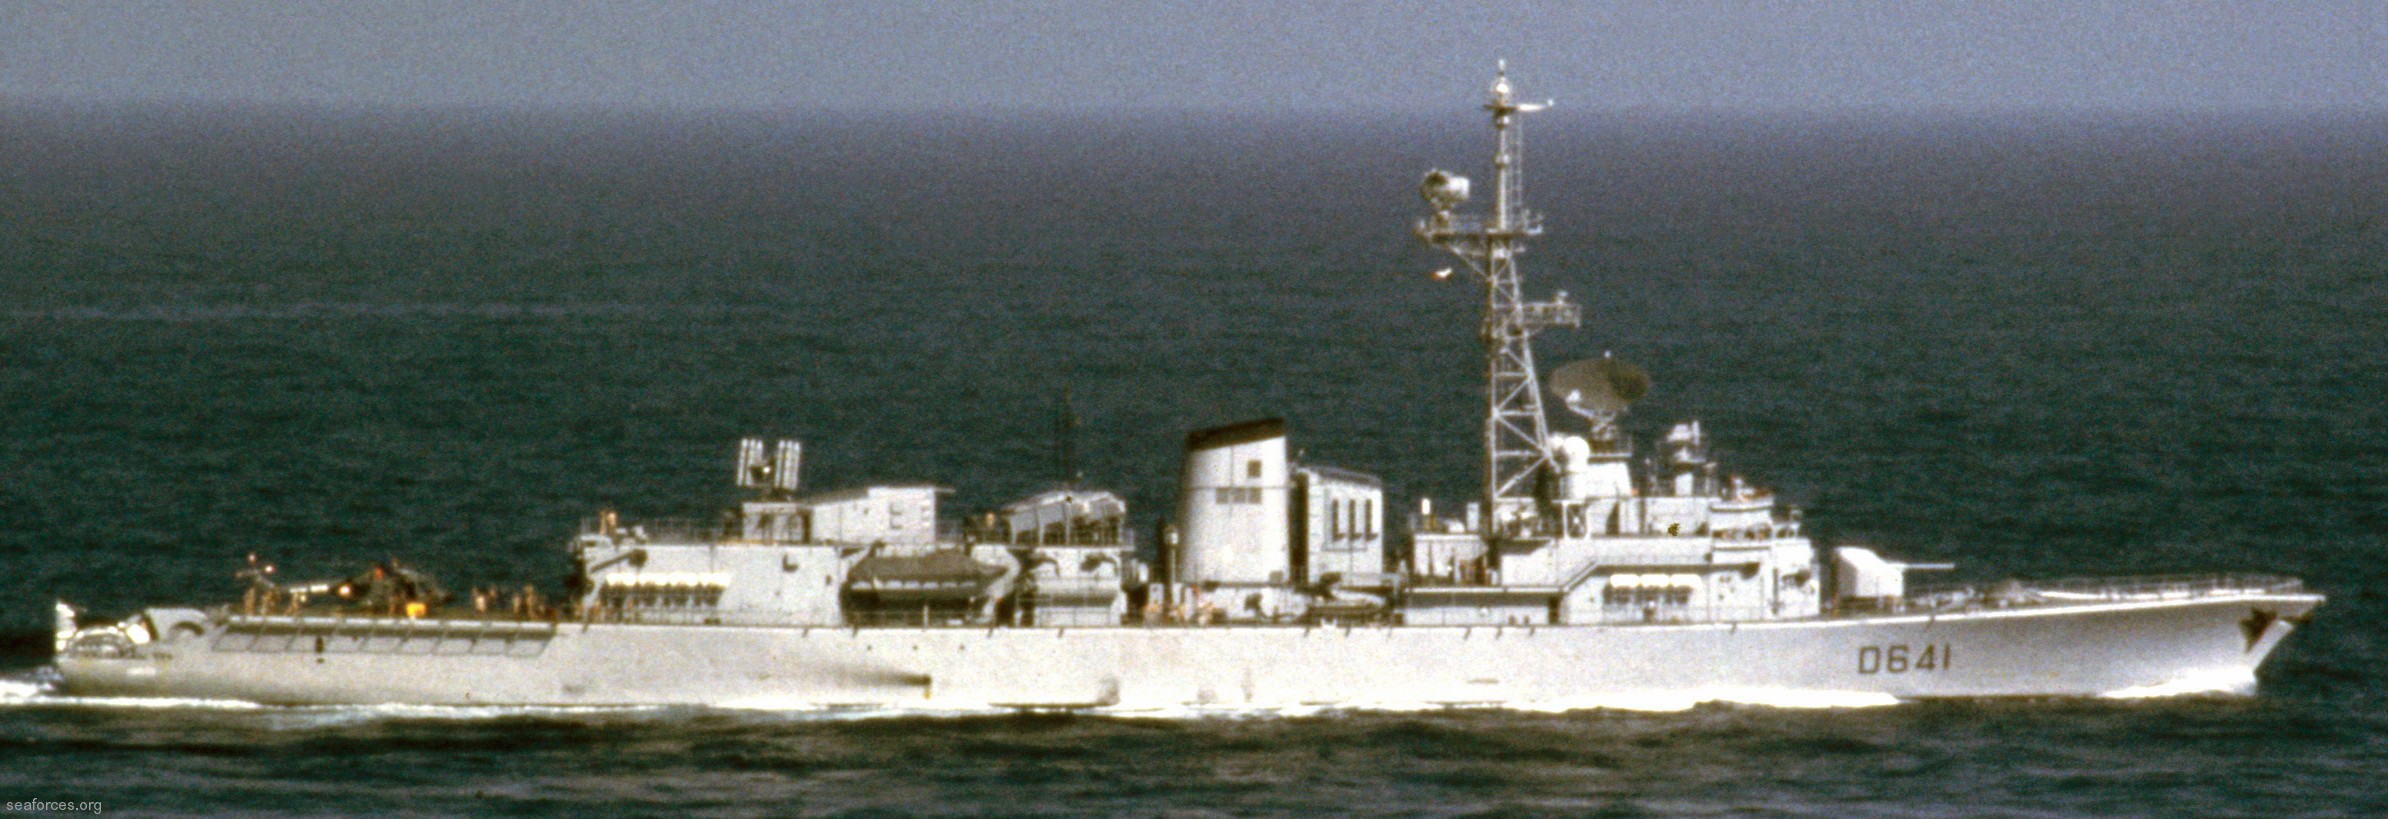 d-641 fs dupleix f70as anti submarine frigate destroyer french navy marine nationale 08